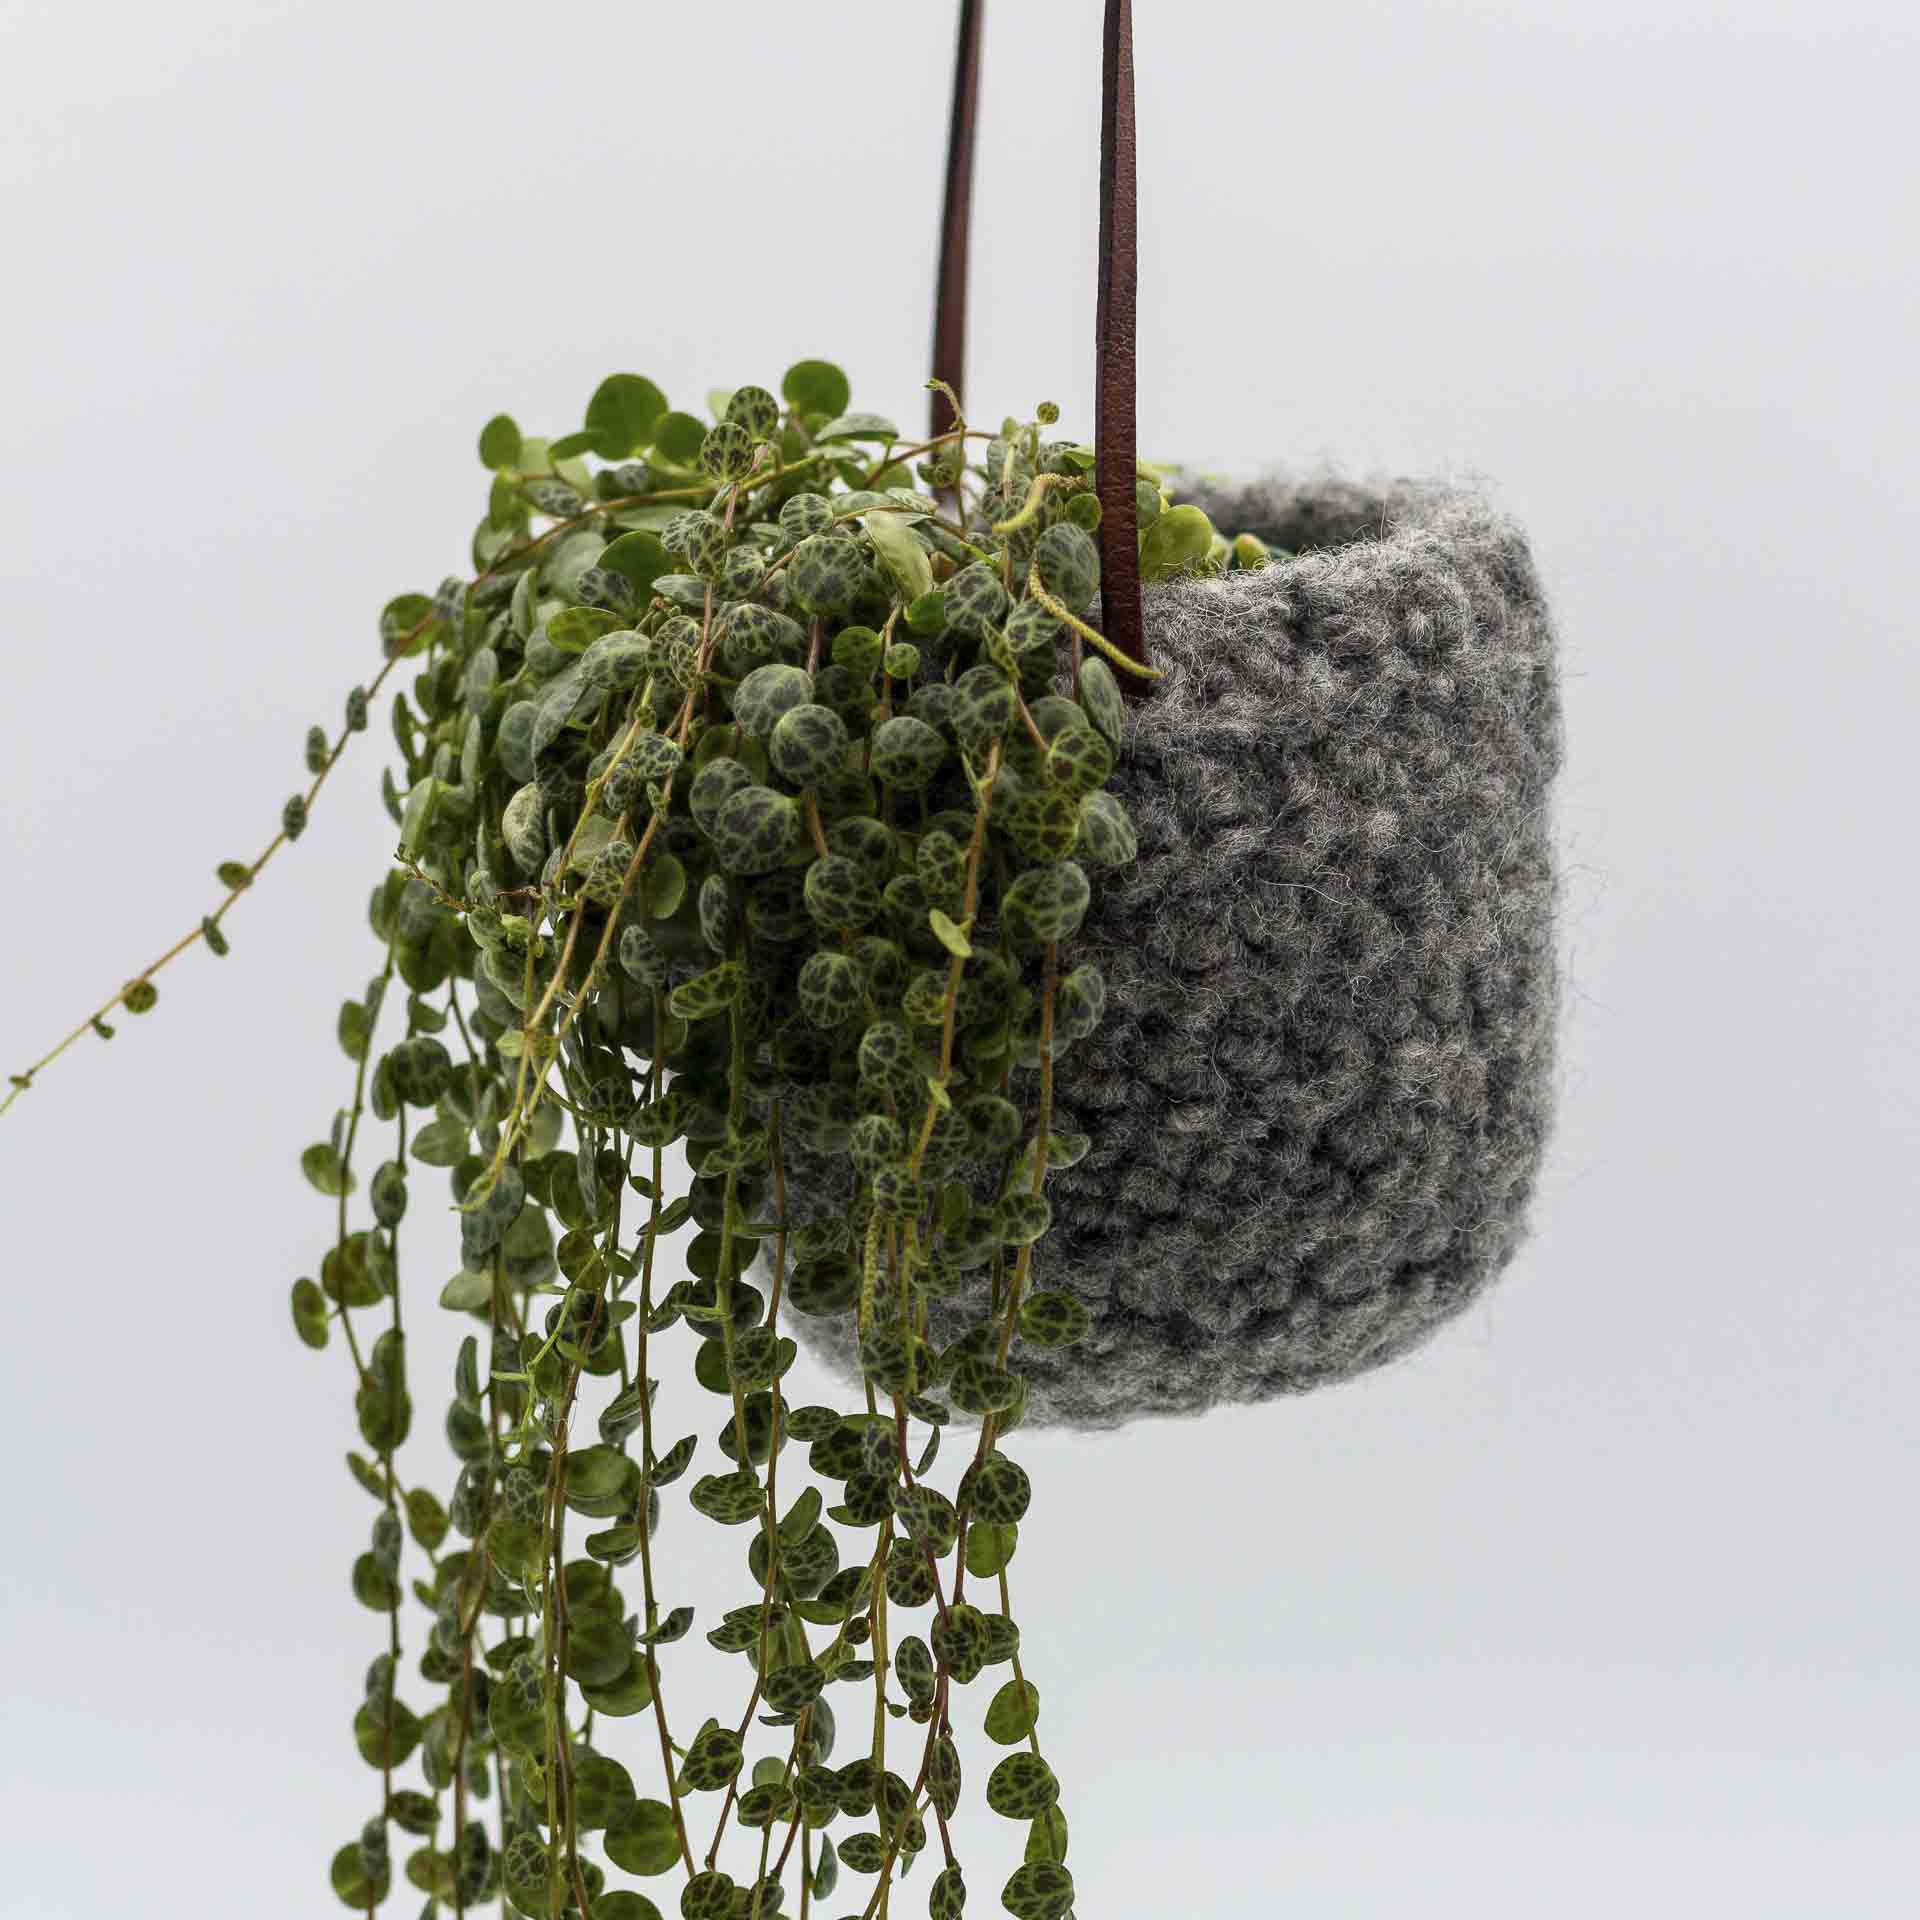 Hanging handmade planter grey wool